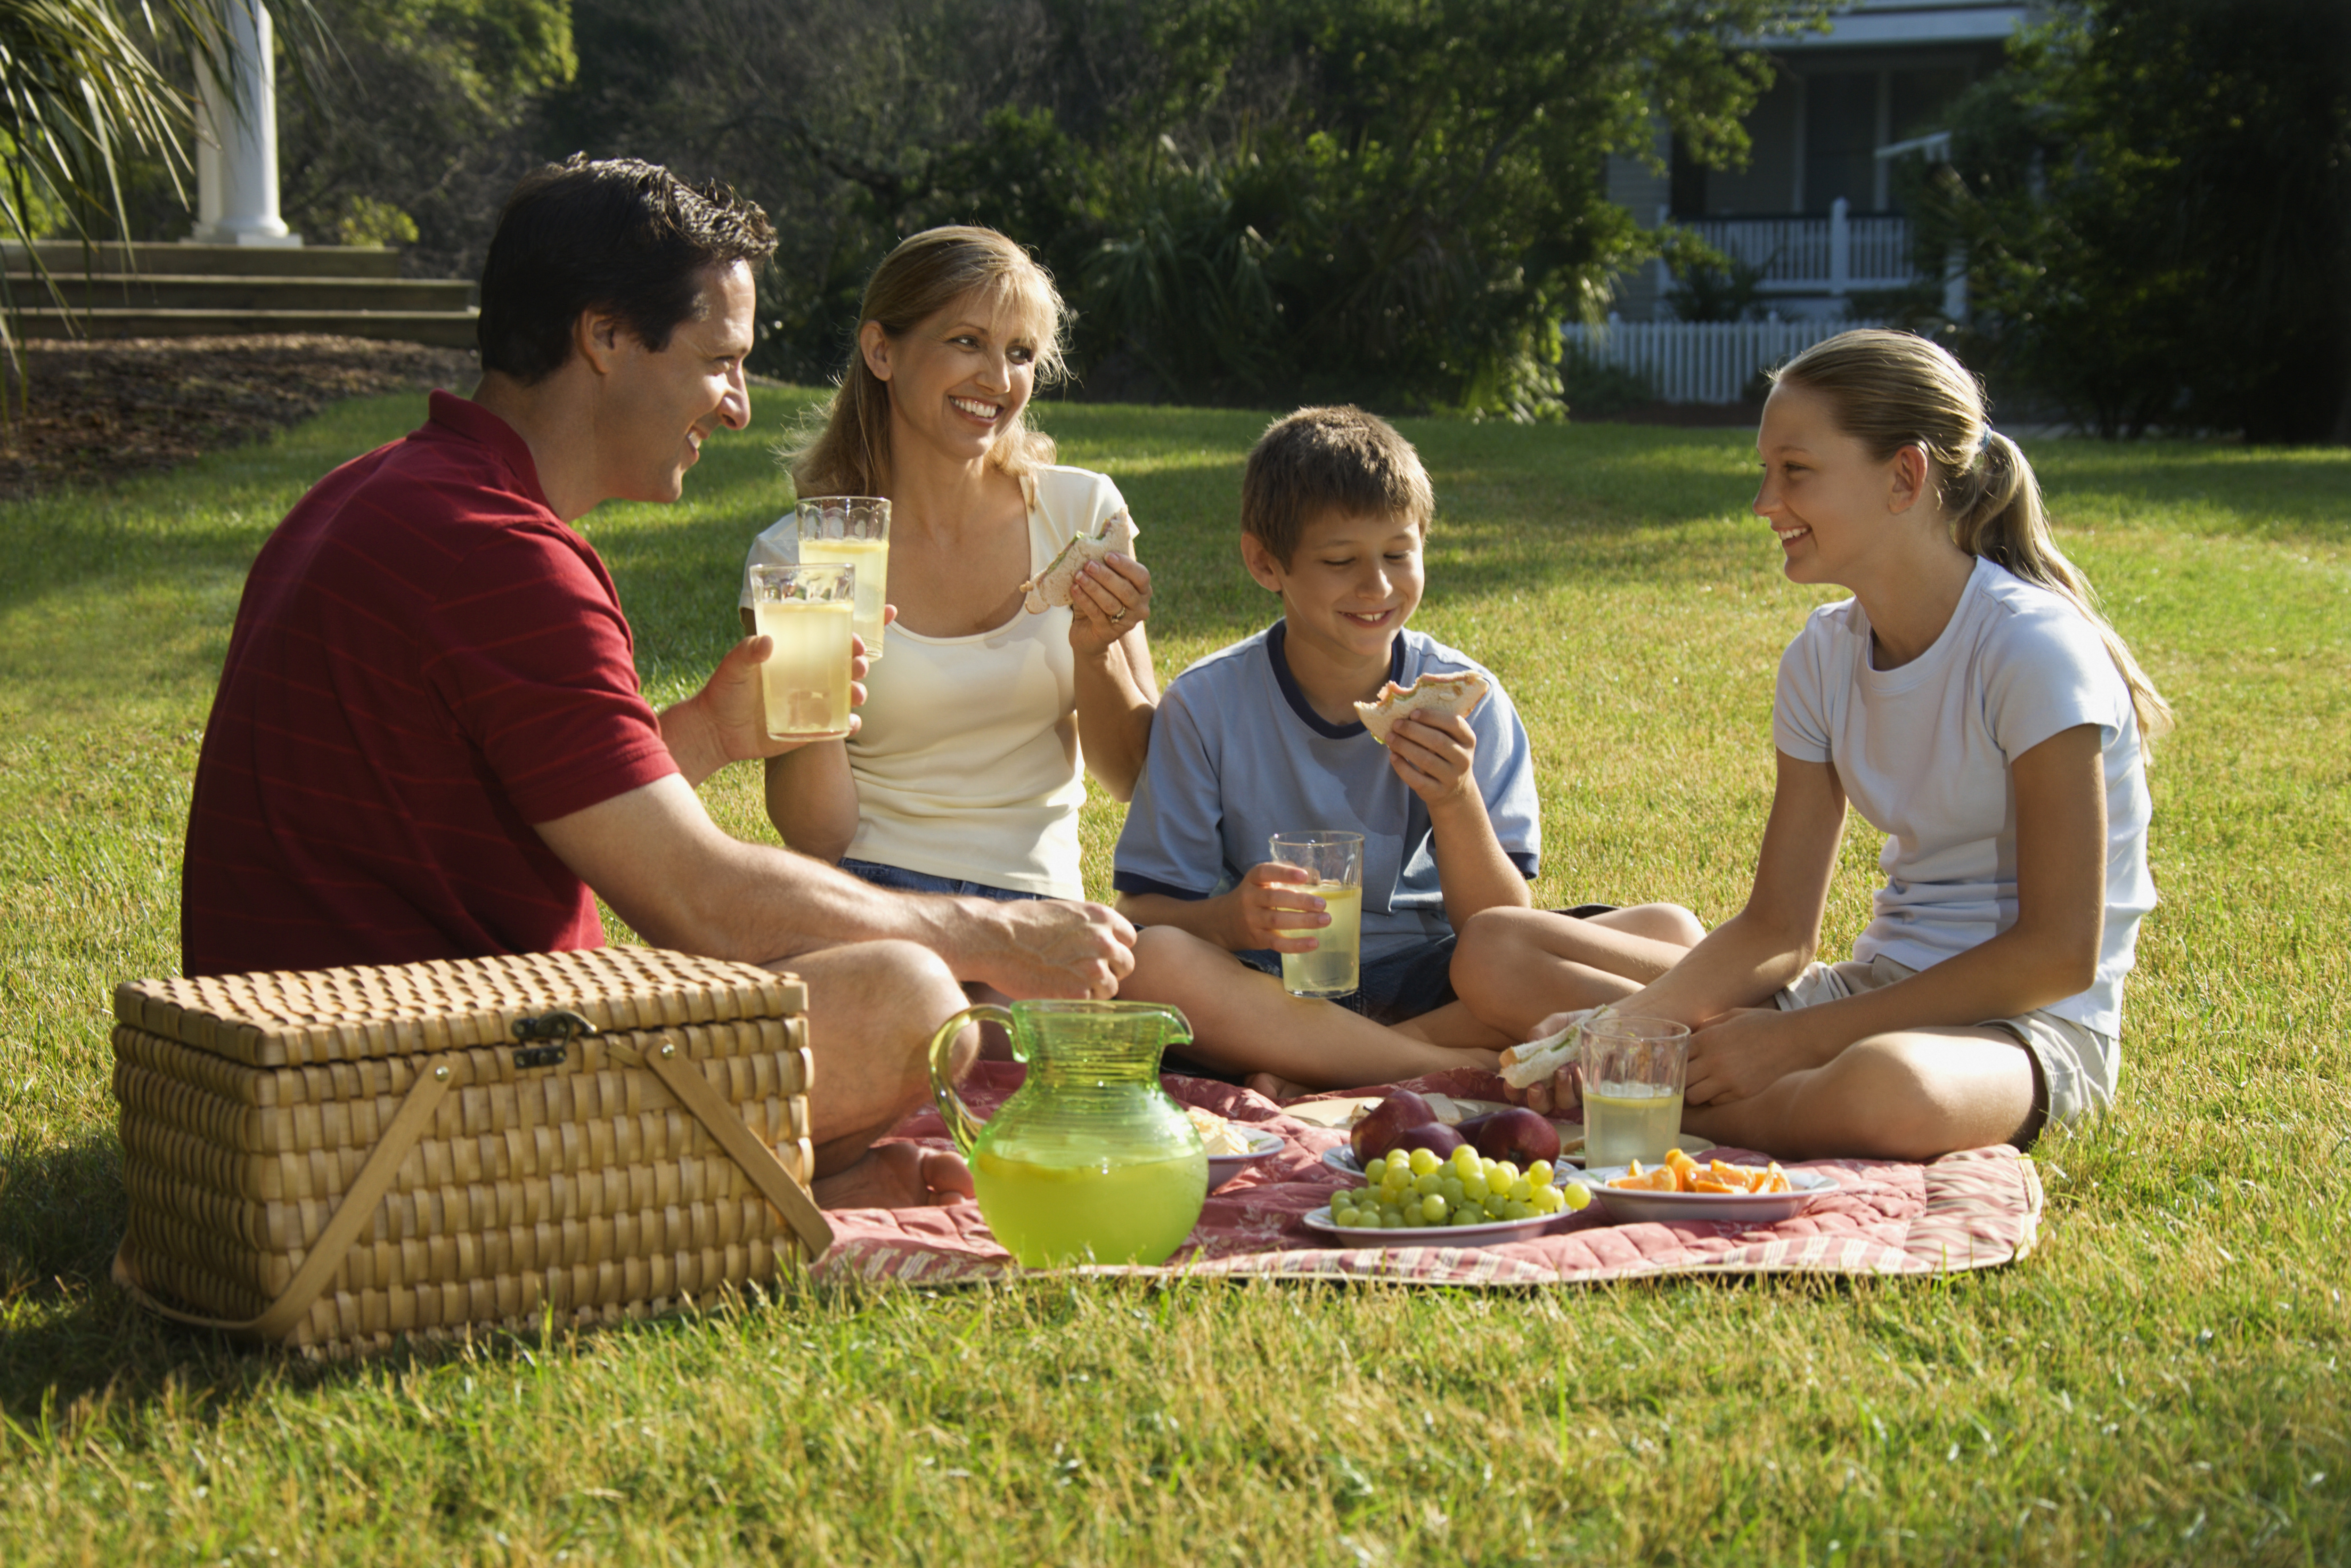 Family having picnic in park. - Calorie Control Council